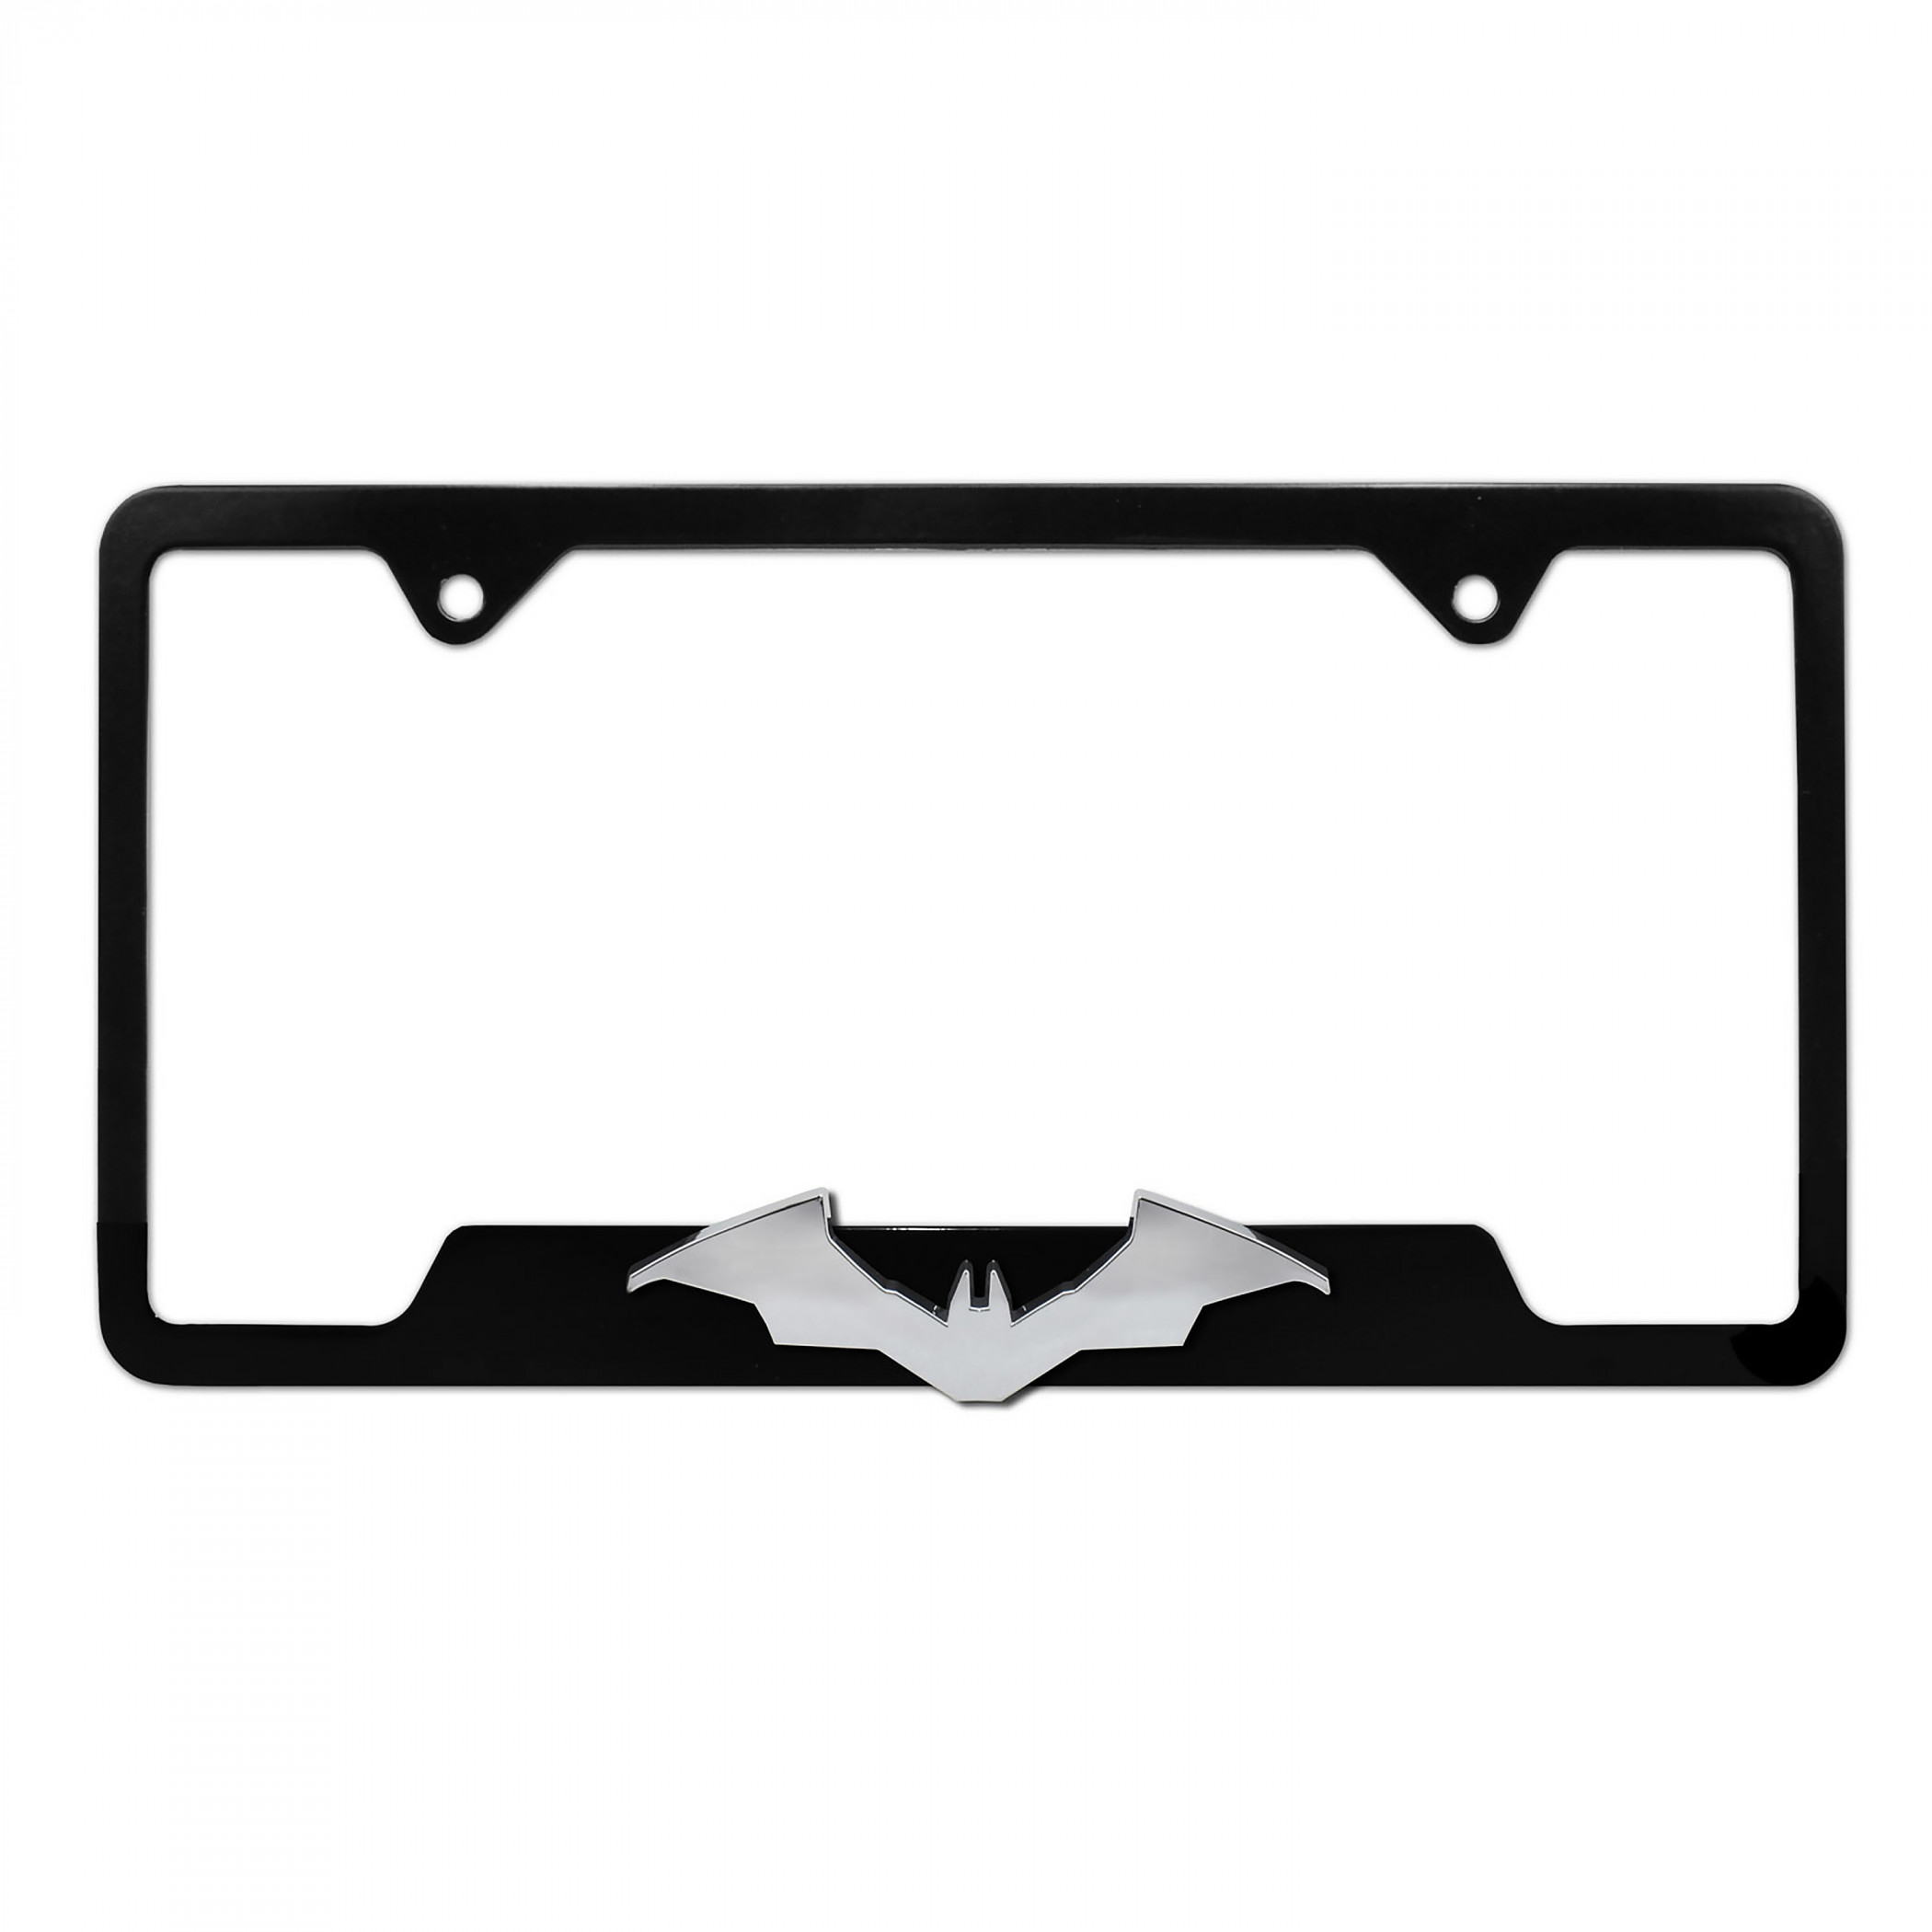 The Batman Movie Emblem Black License Plate Frame by Elektroplate